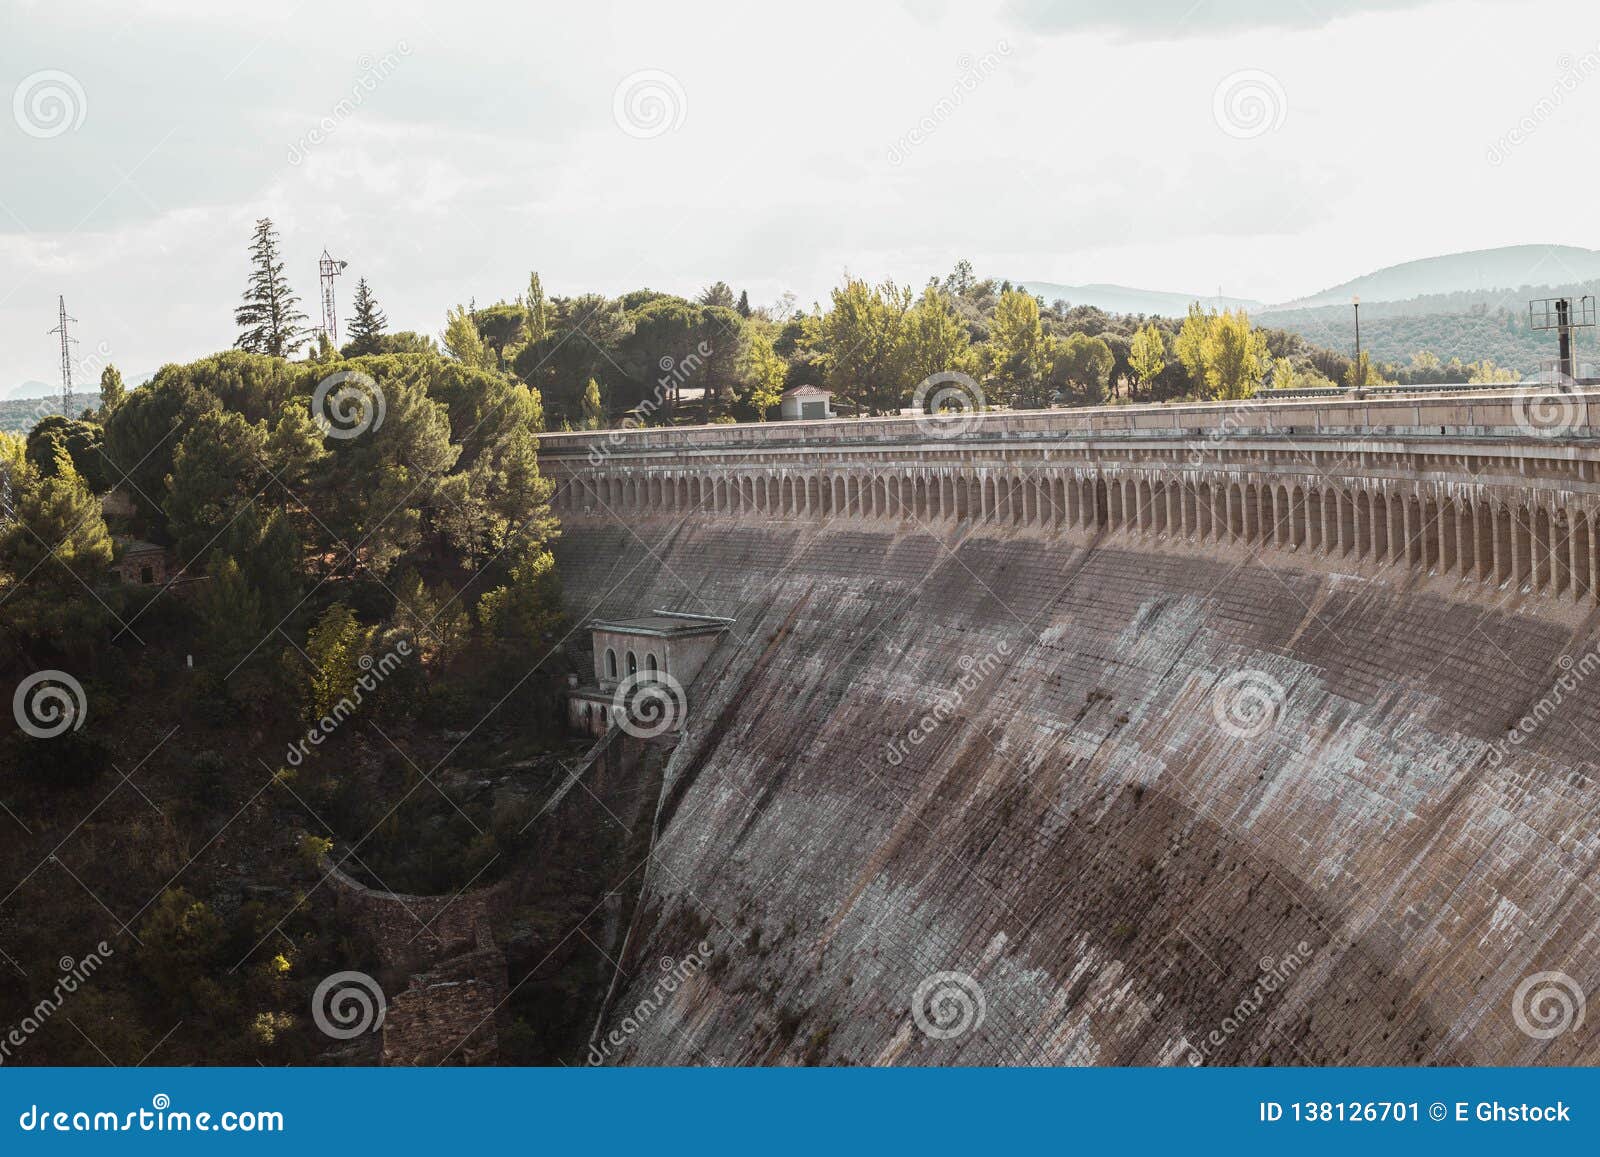 reservoir in the nature, embalse de puentes viejas , spain